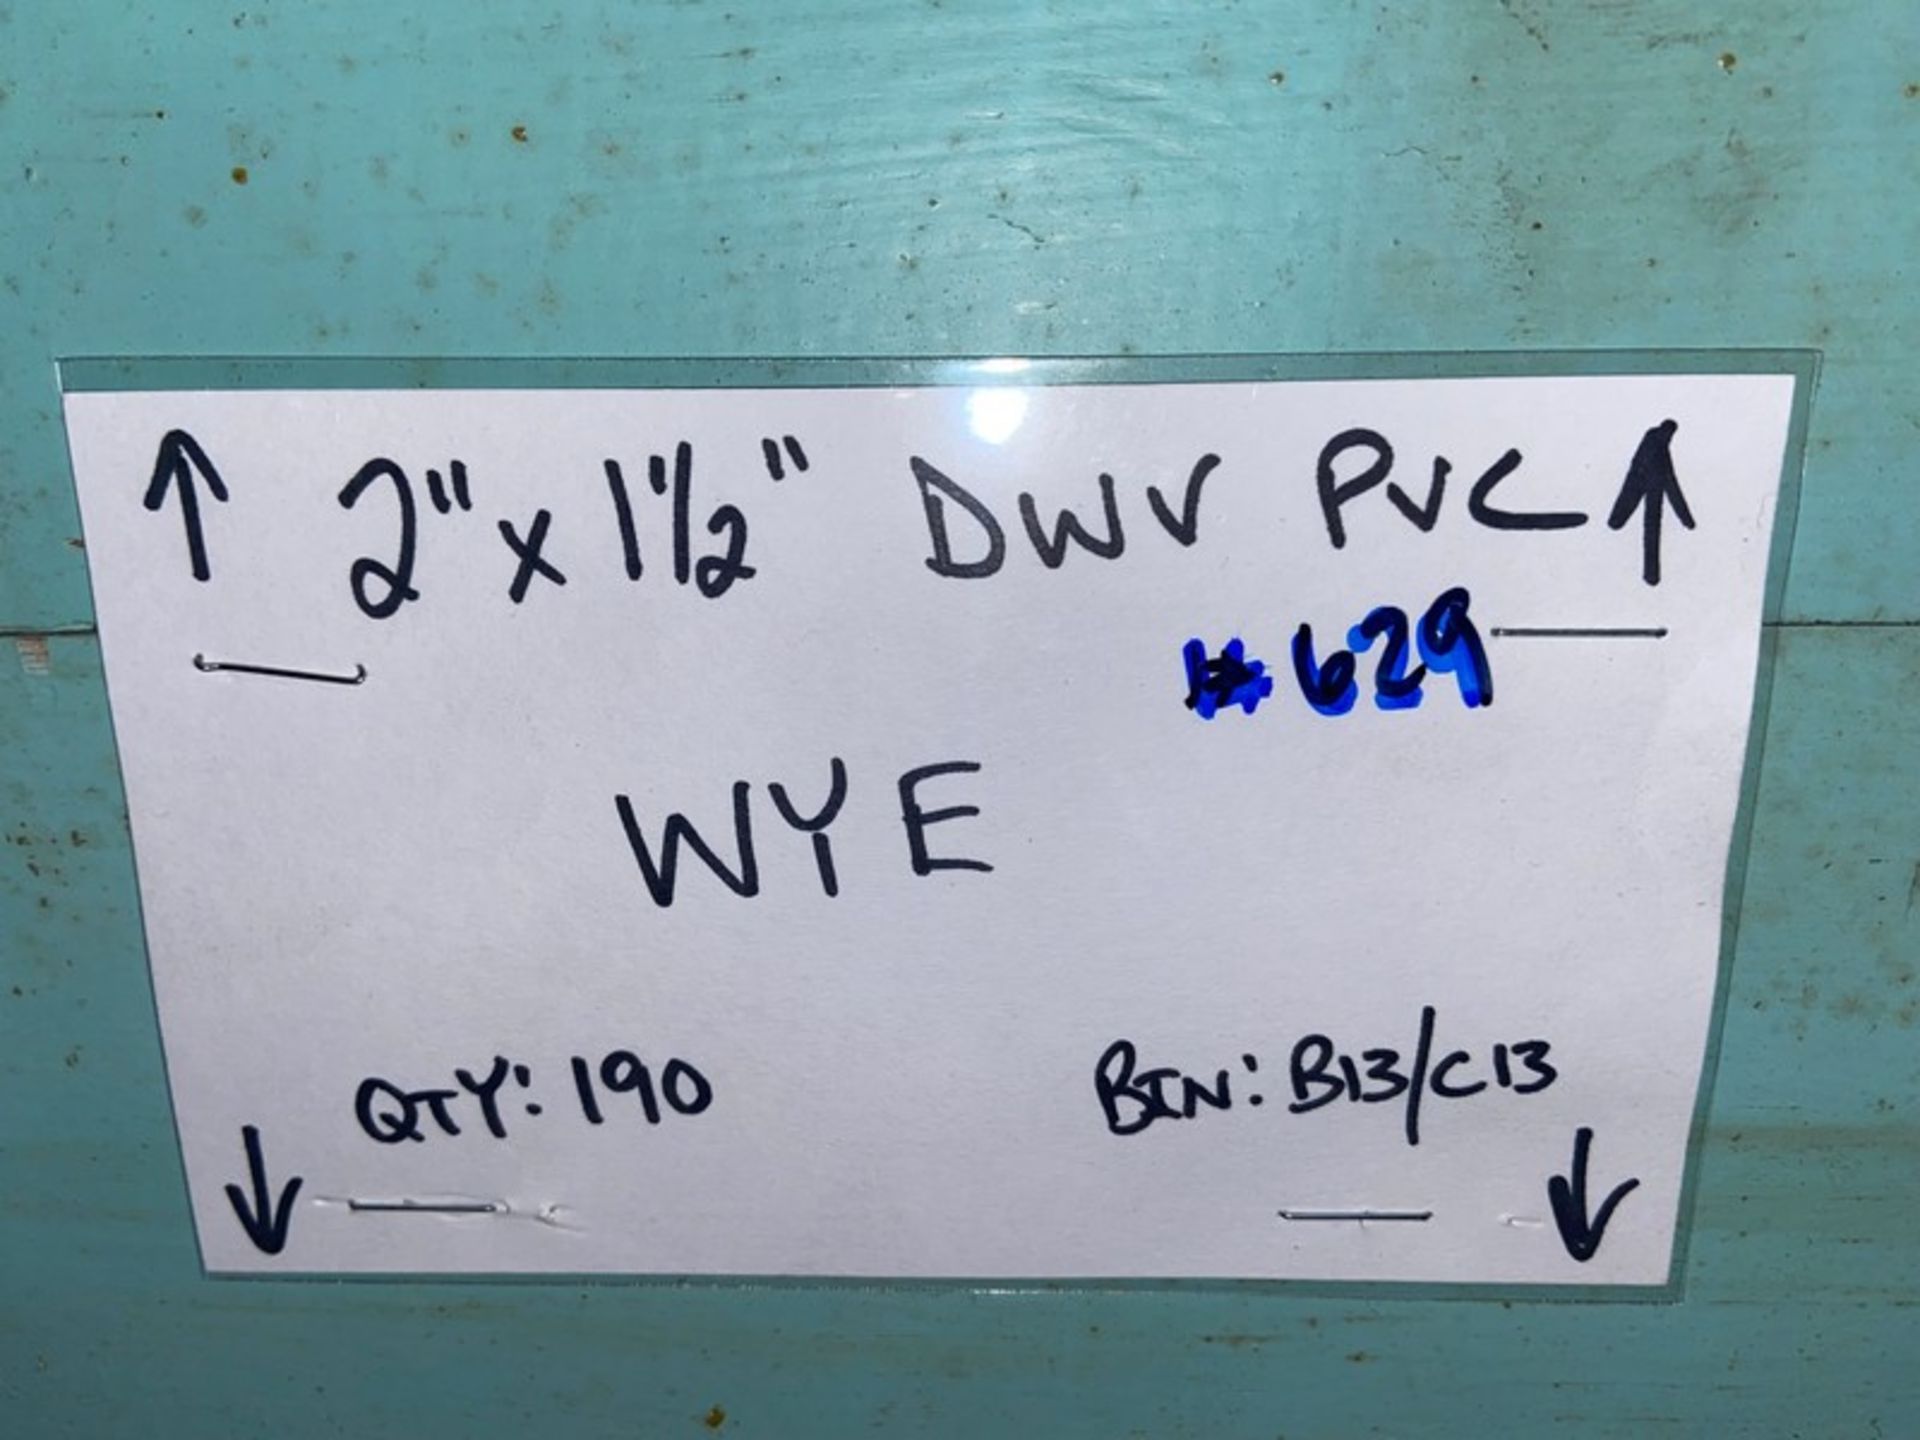 (190) 2”x1 1/2” DWV PVC WYE (Bin:B13/C13) (LOCATED IN MONROEVILLE, PA) - Image 3 of 3